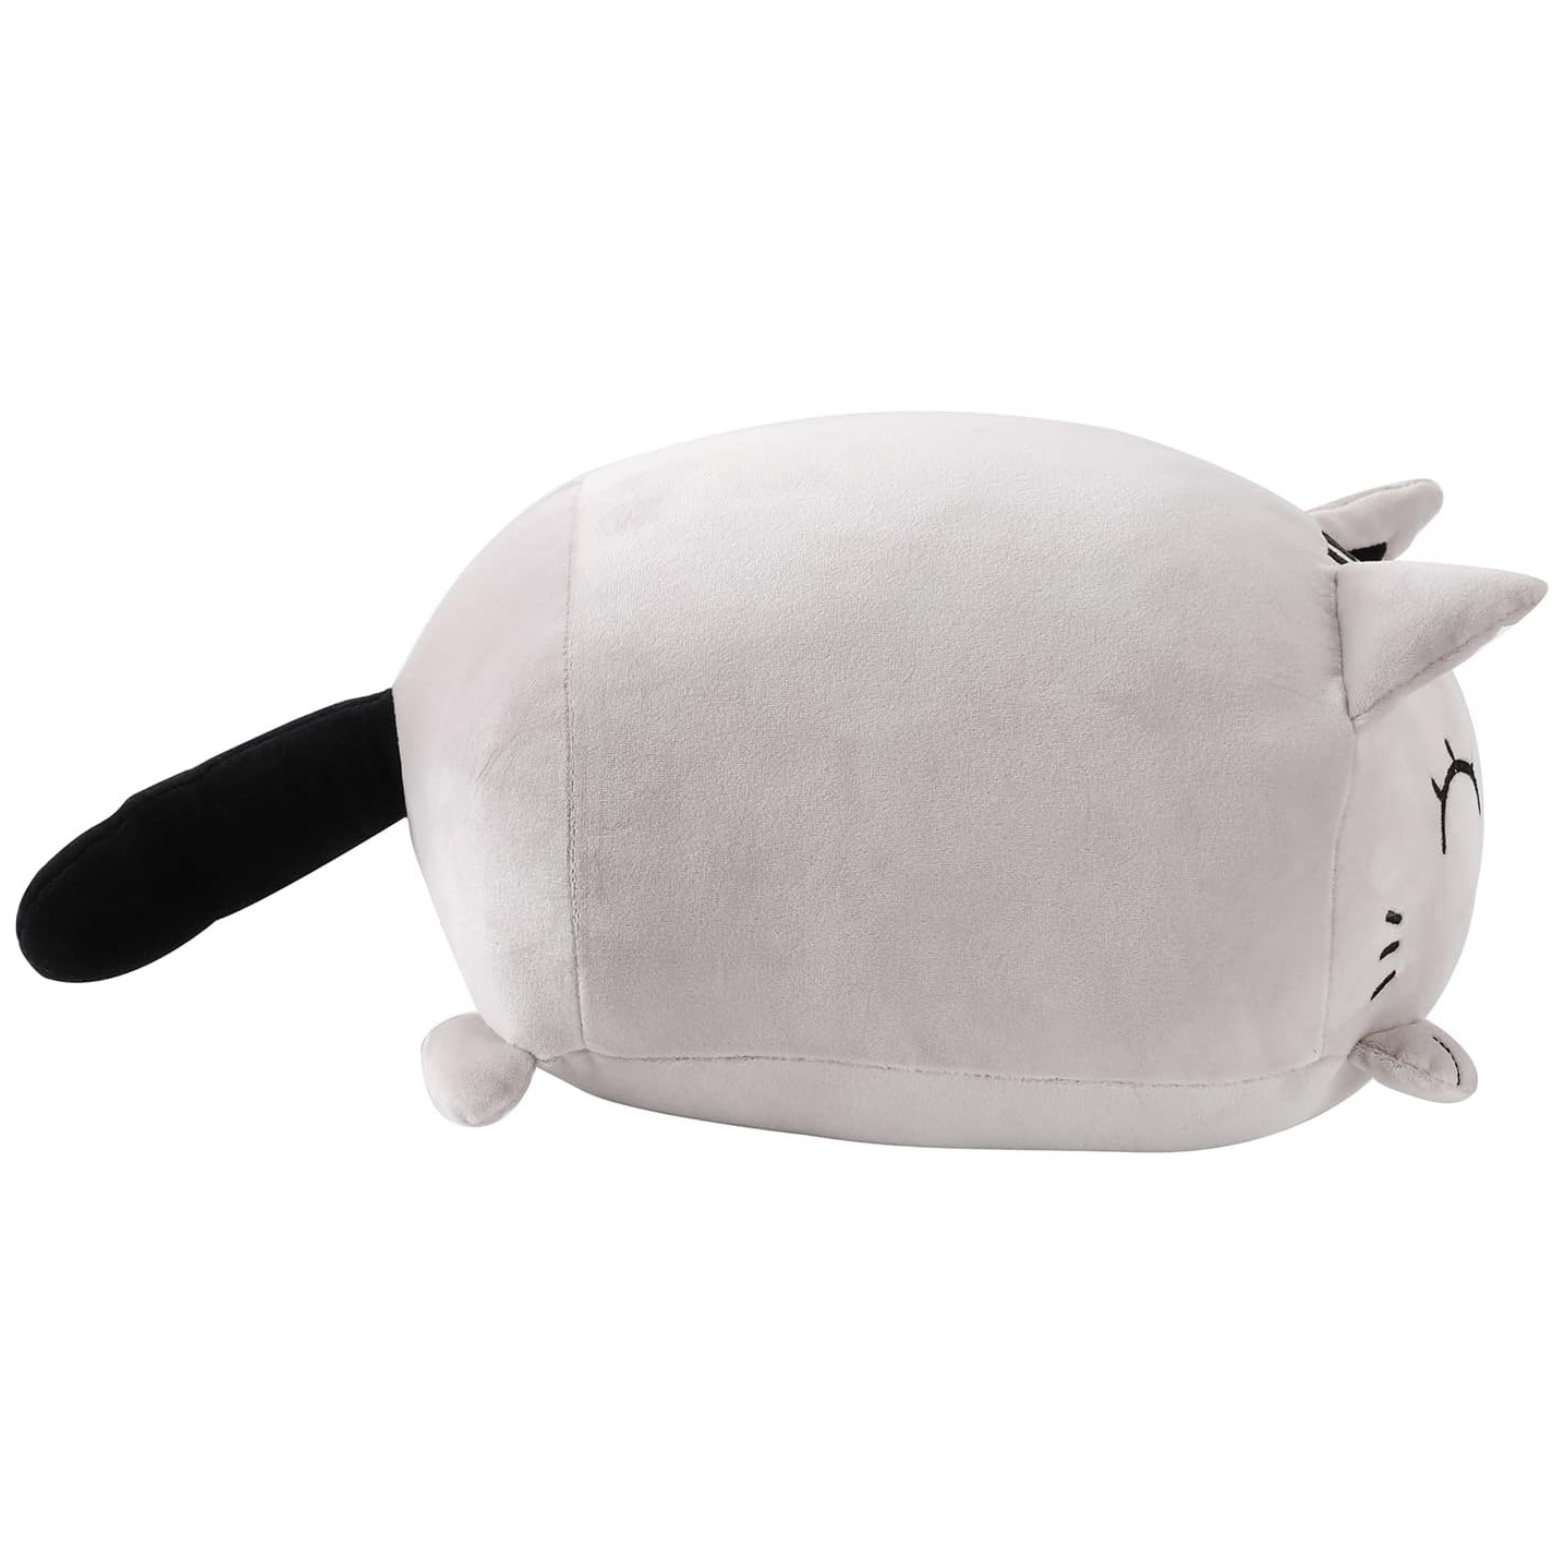 Squishmallow - Cat gray pillow